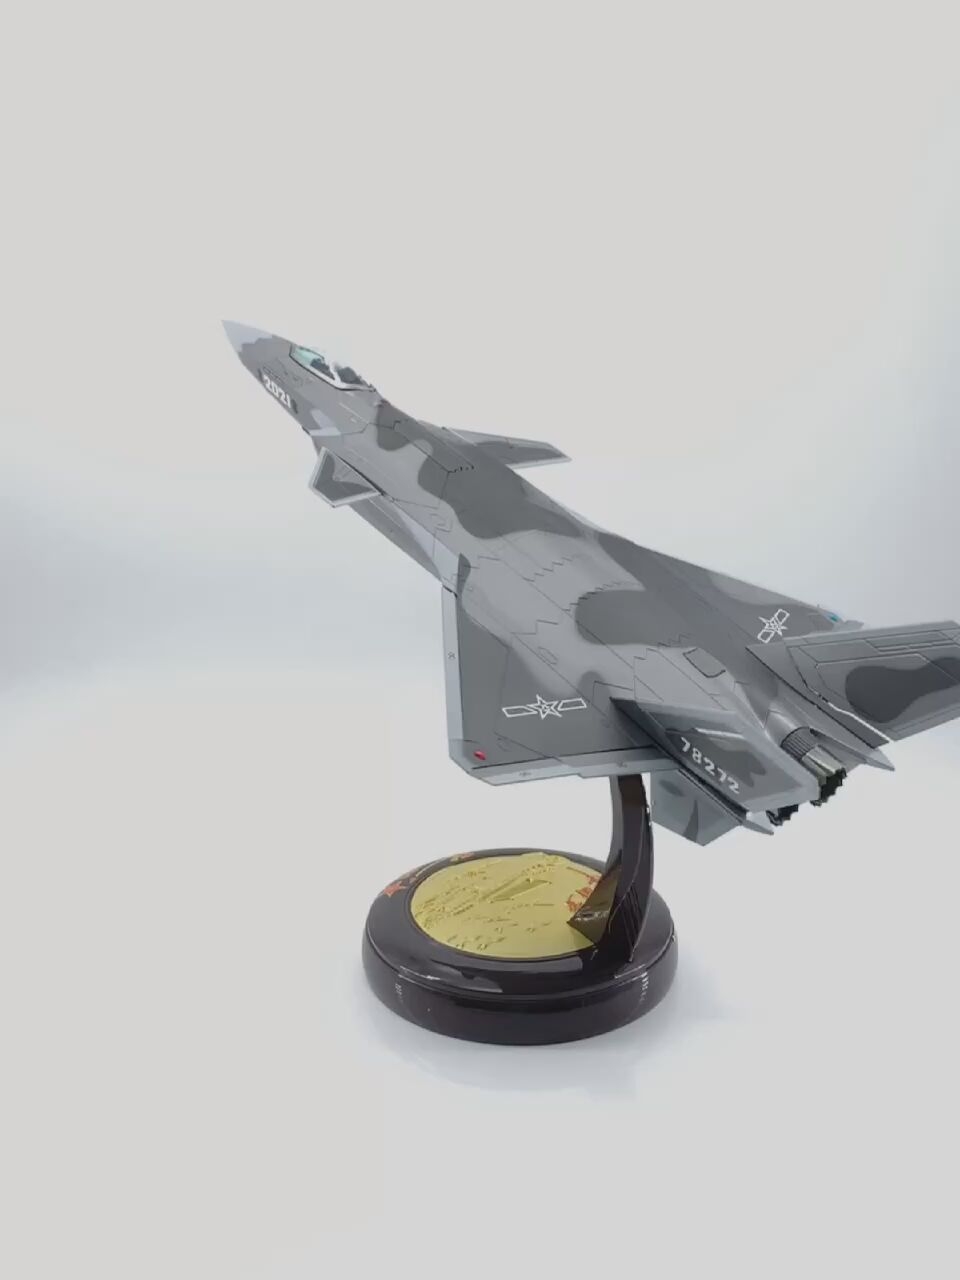 148 F-20 전투기 모델 항공기 합금 정적 시뮬레이션 군사 선물 장식